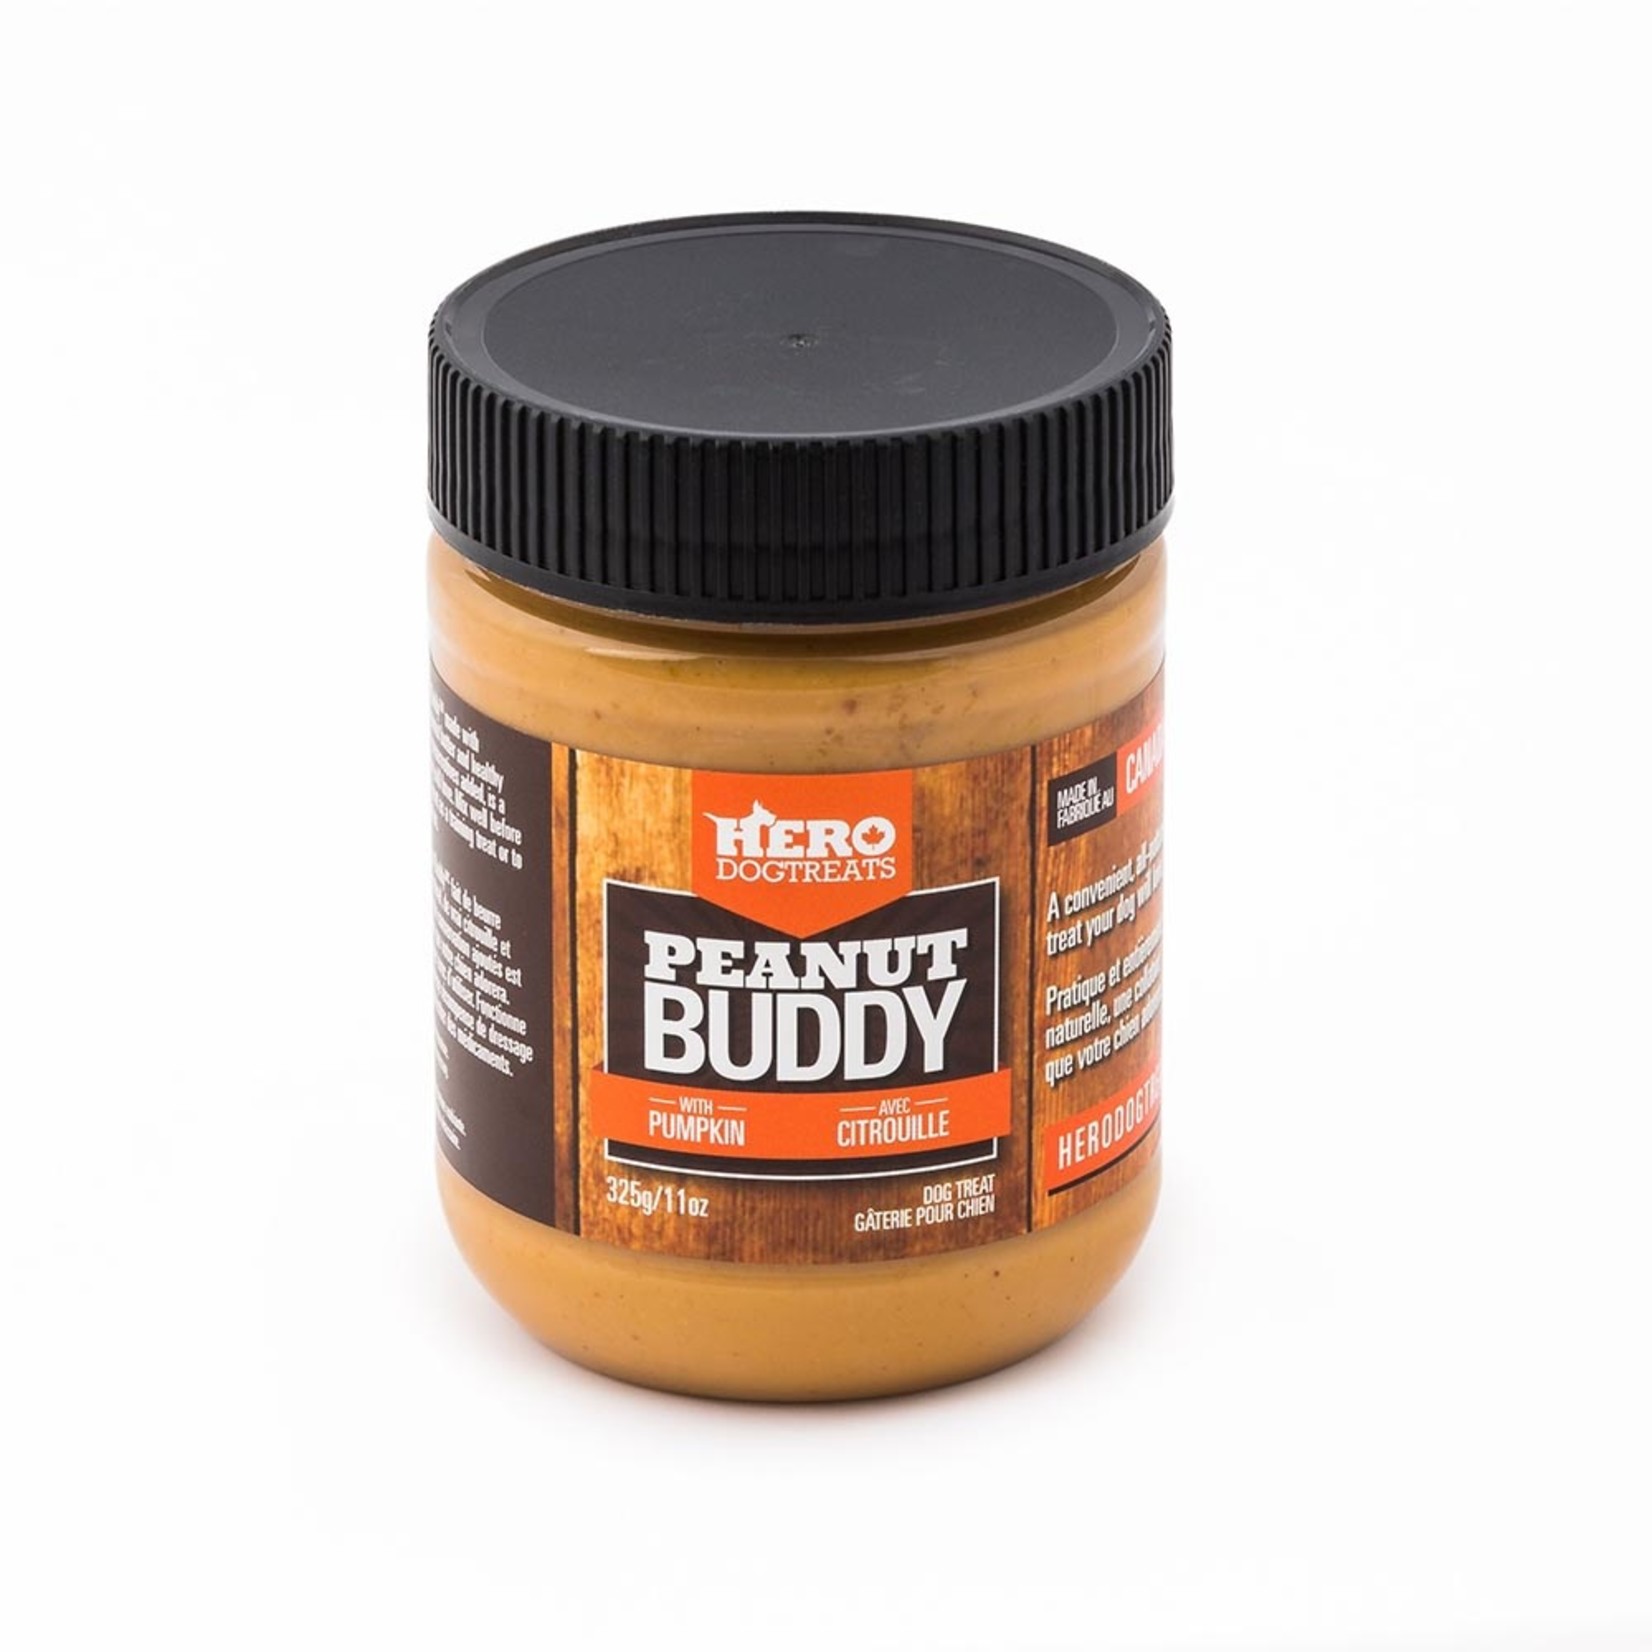 HERO Peanut Buddy Pumpkin 325g